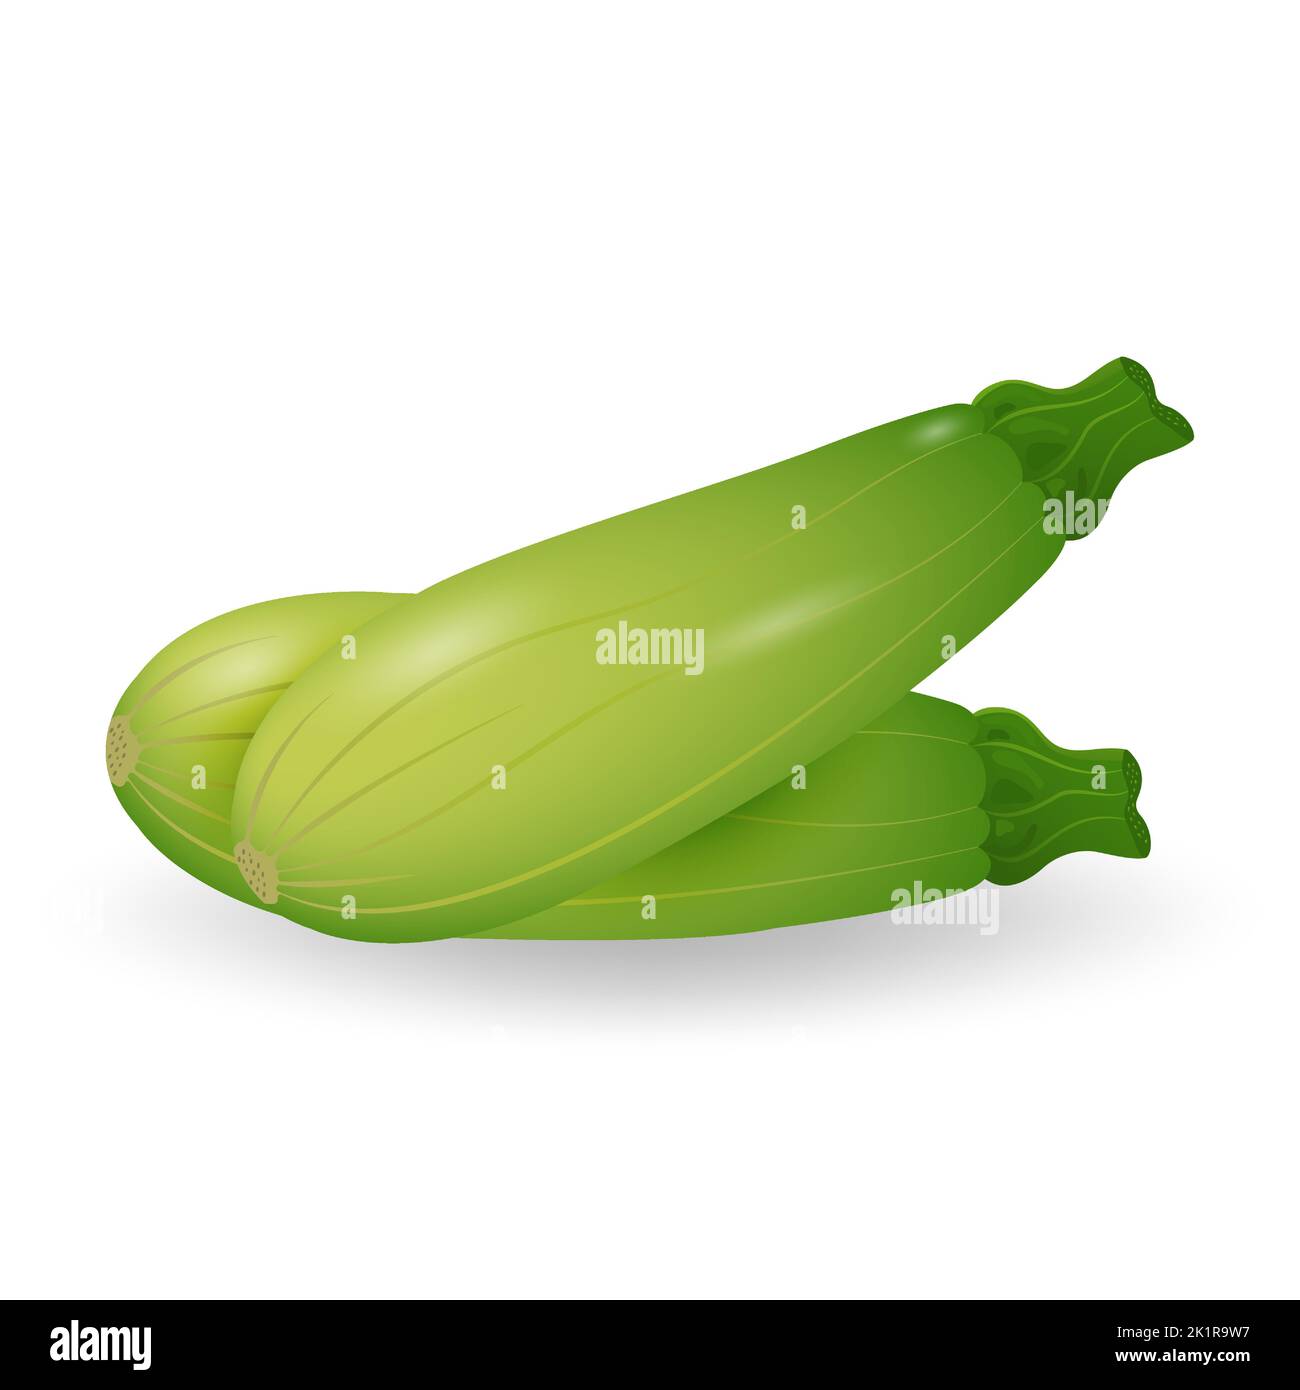 https://c8.alamy.com/comp/2K1R9W7/marrow-zucchini-isolated-on-white-background-fresh-vegetables-vector-illustration-2K1R9W7.jpg